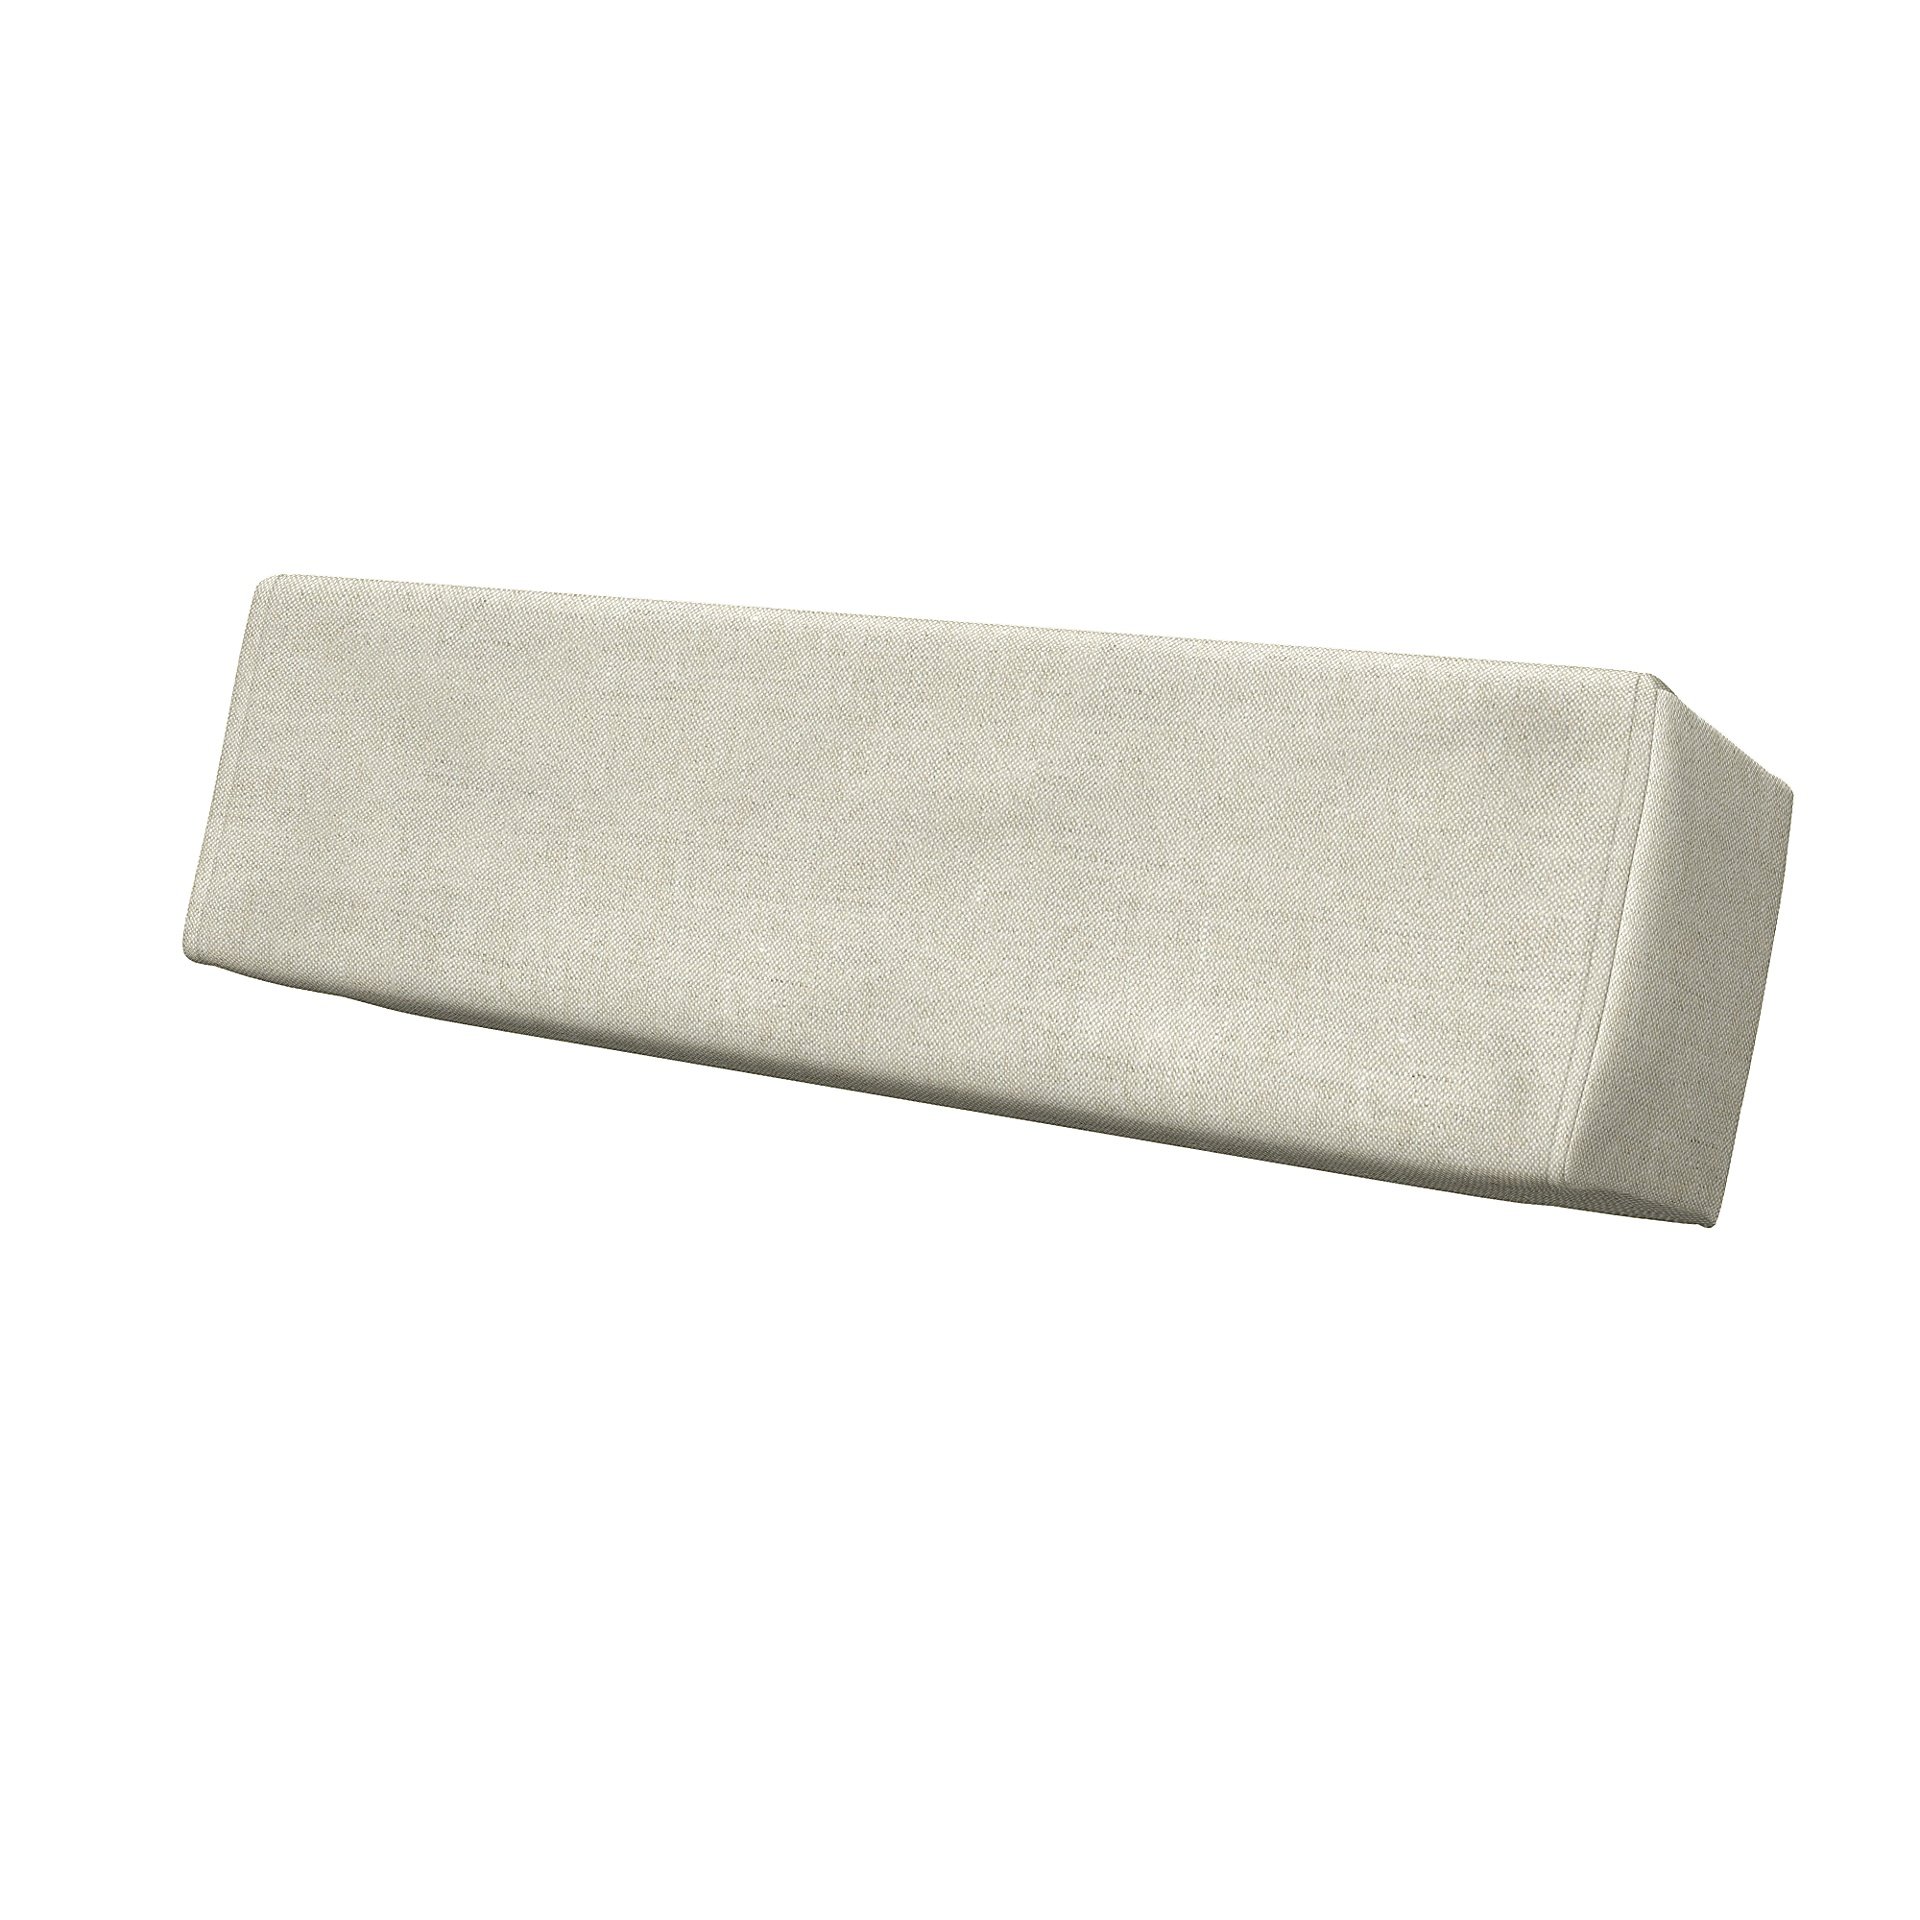 IKEA - Cushion Cover Beddinge Square , Natural, Linen - Bemz